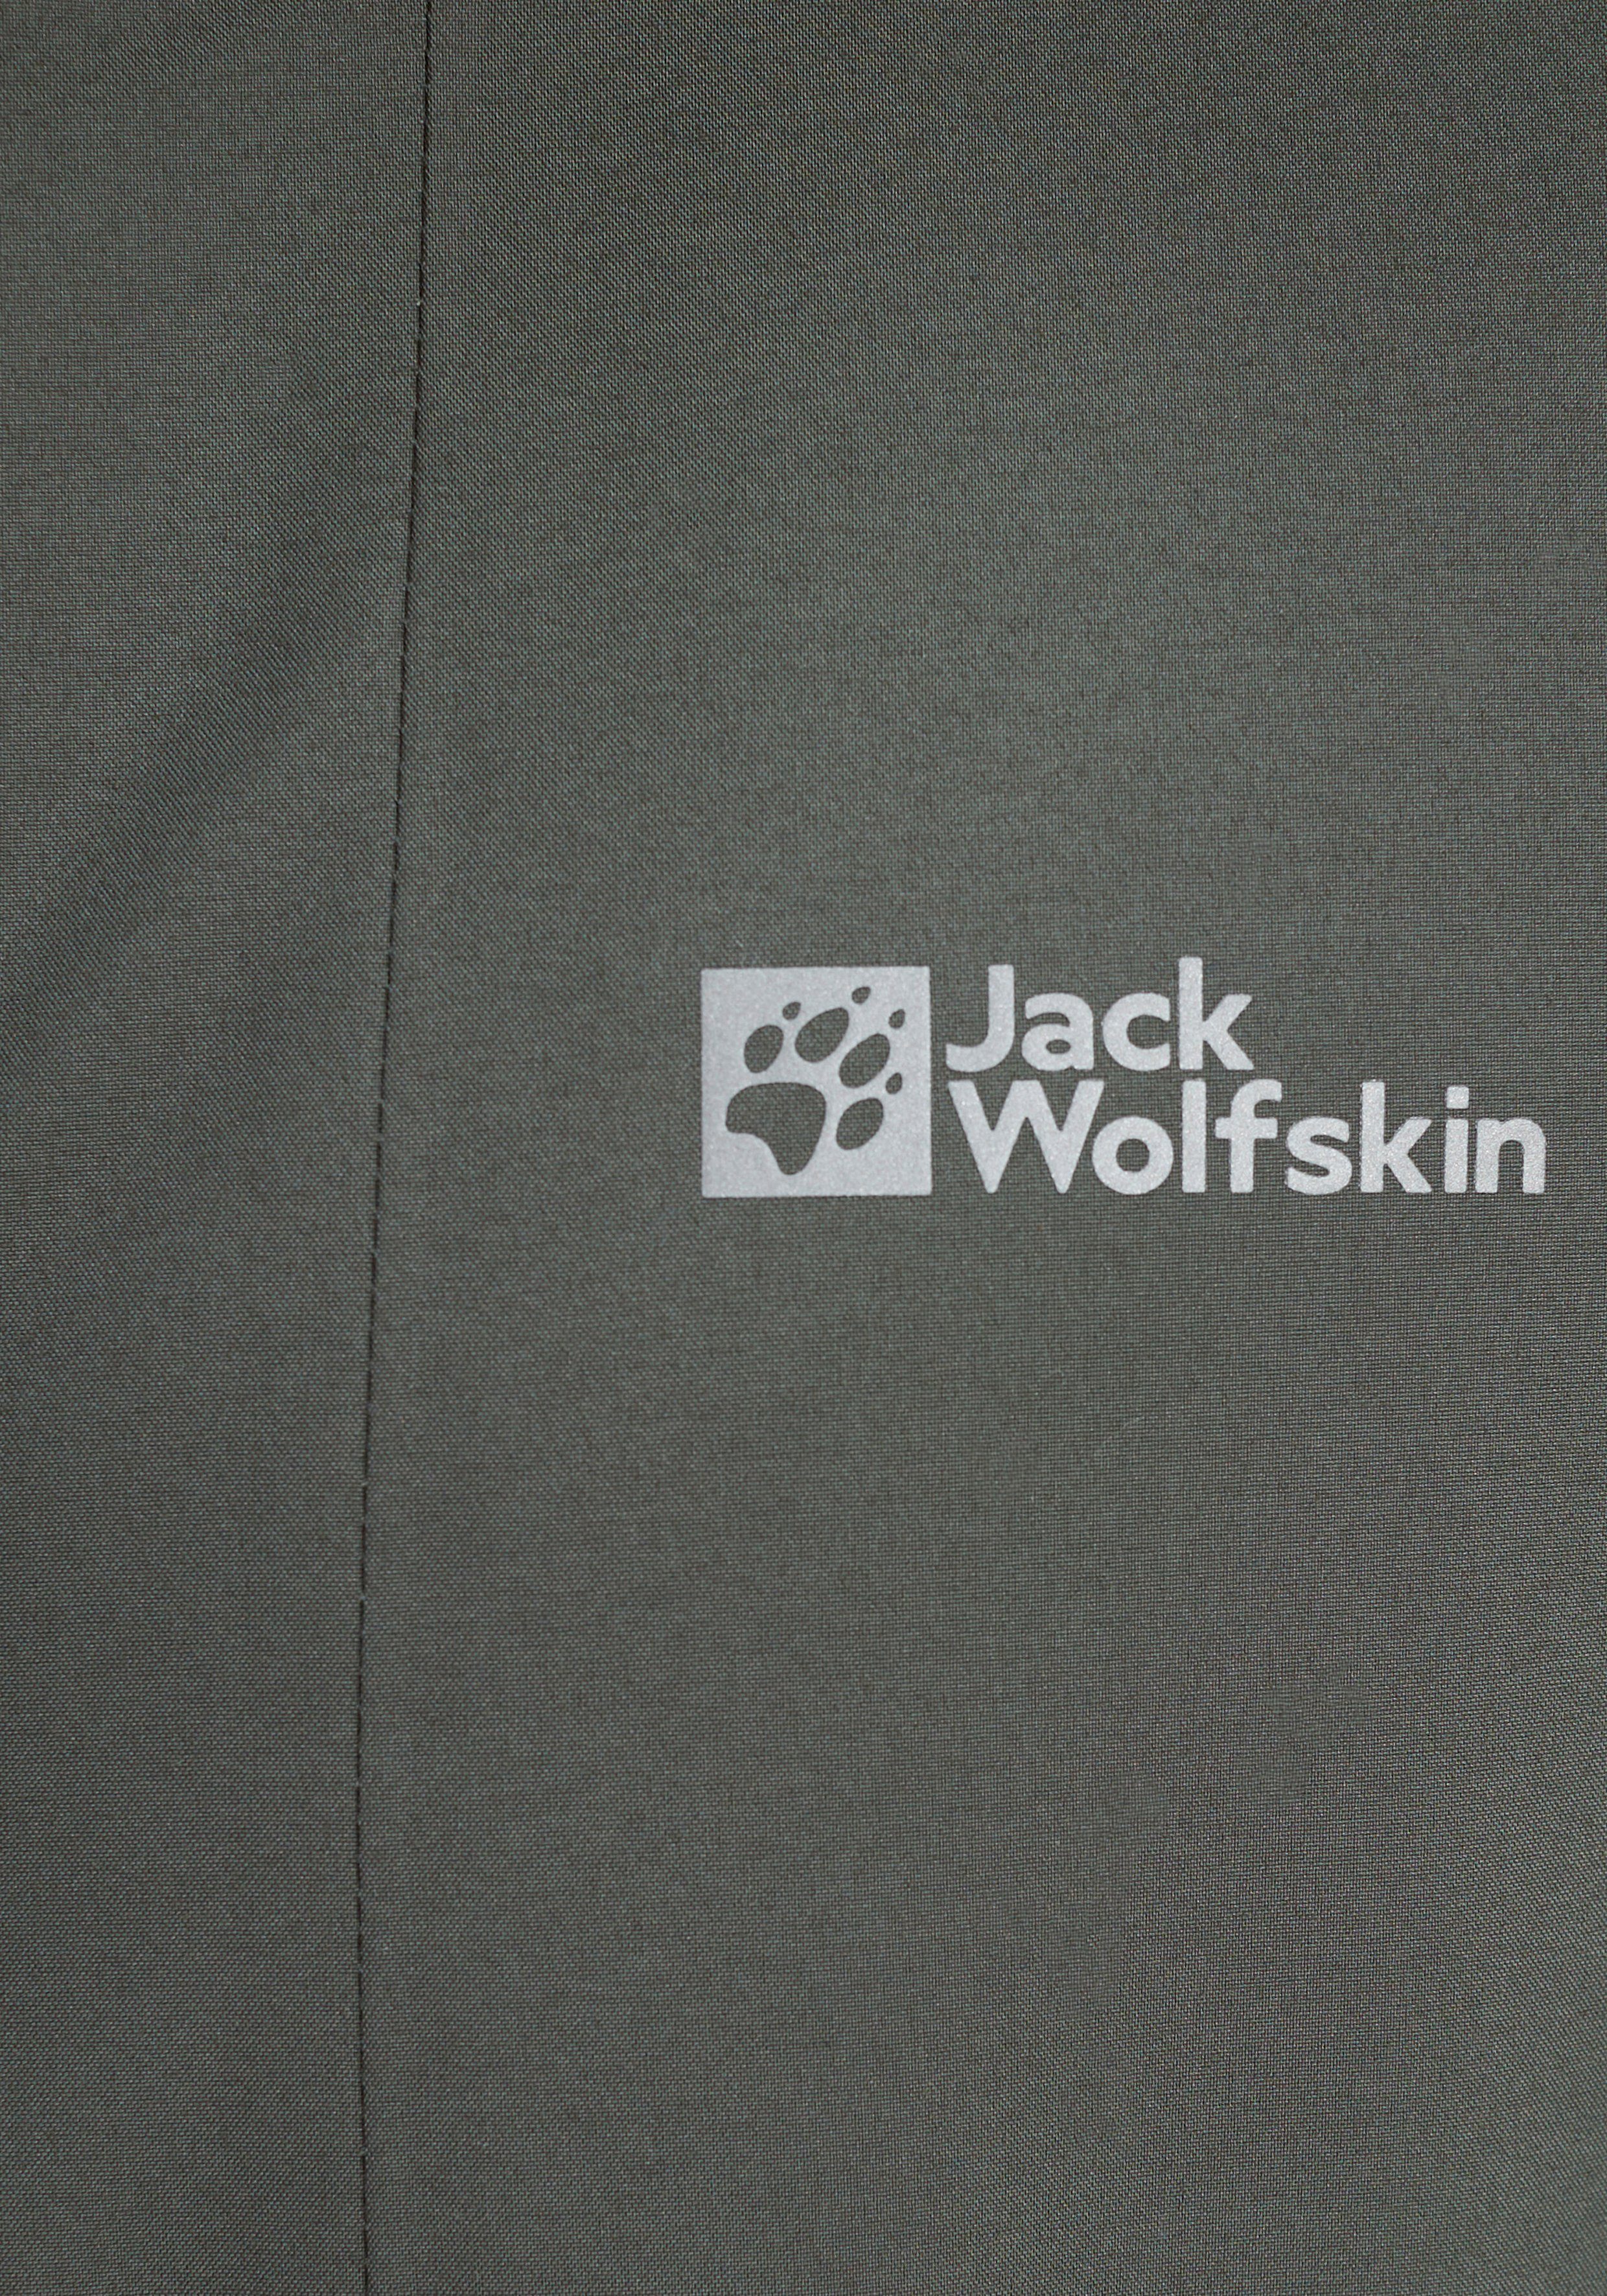 Jack Wolfskin BEAR K klassischen isolierender slate green langer, Design im Outdoorjacke Kinderparka COSY JACKET